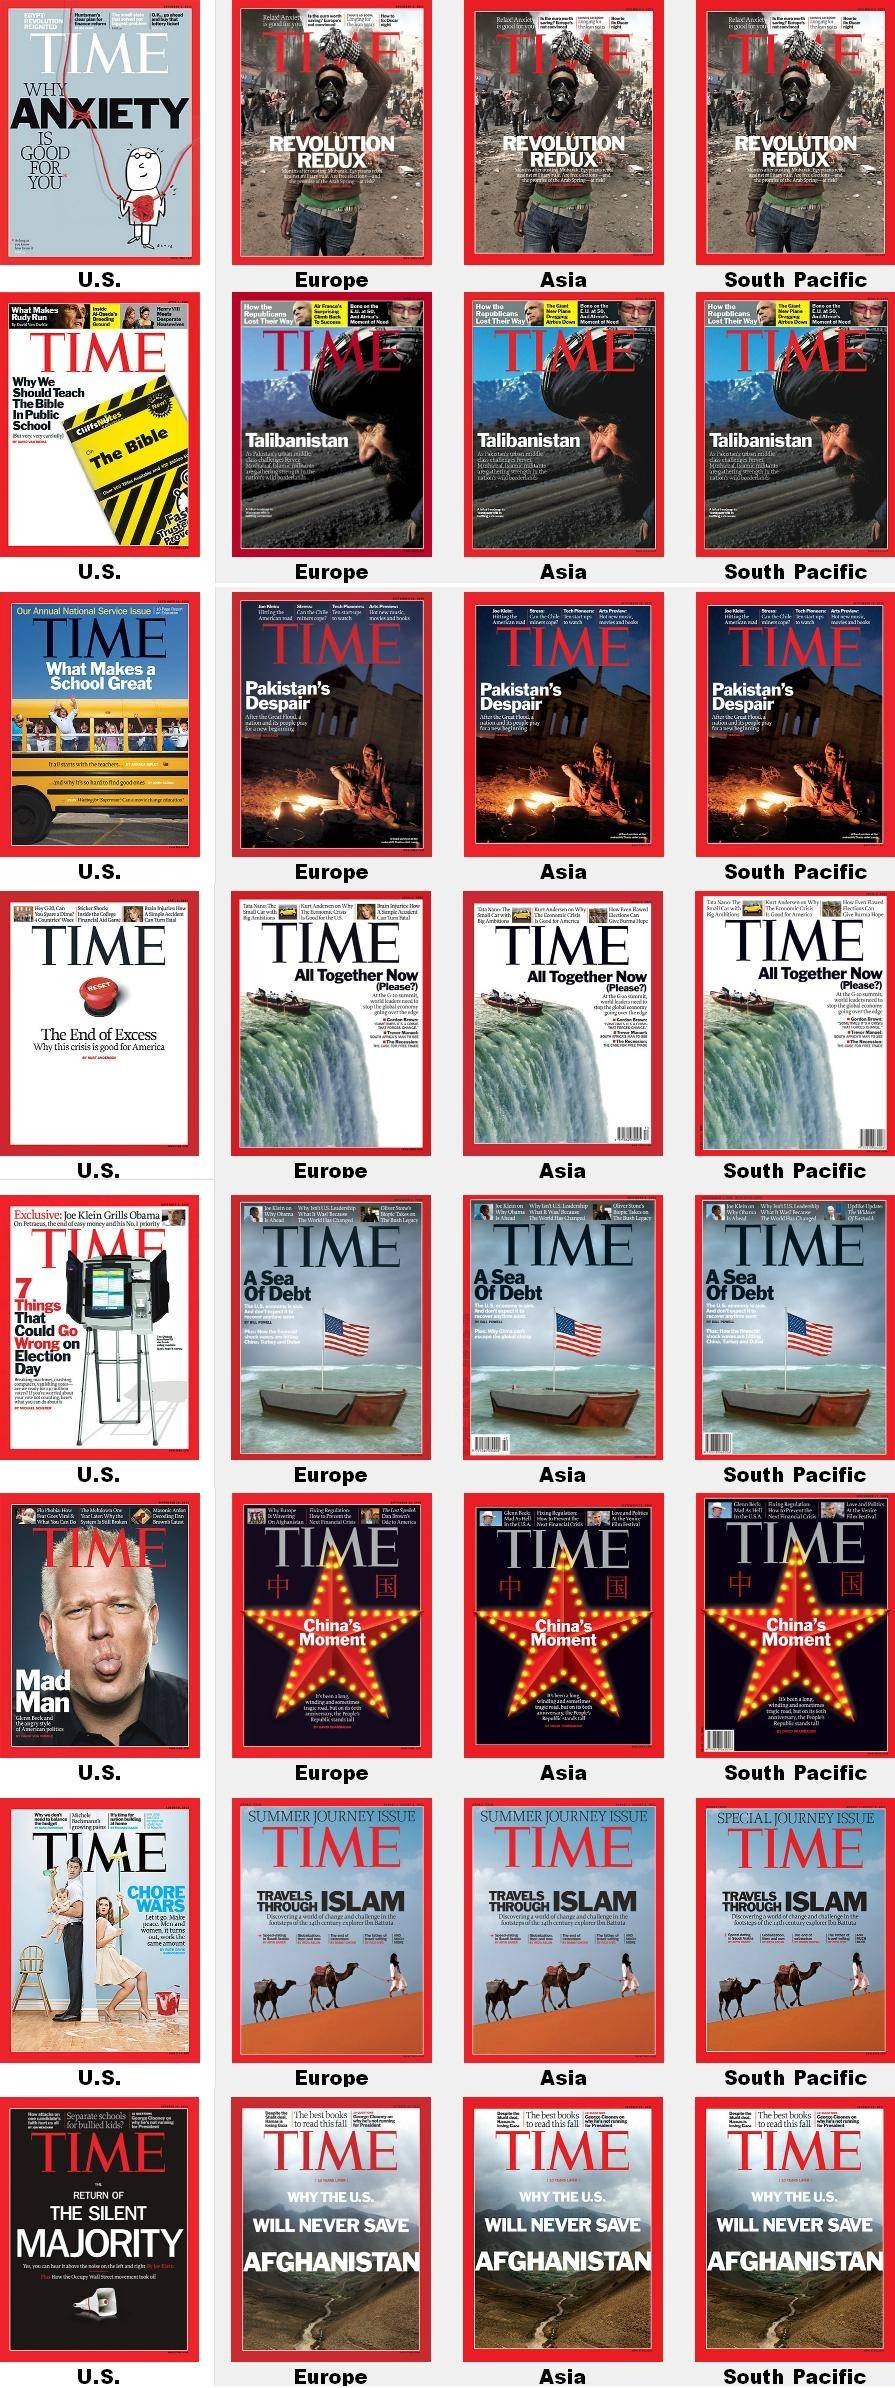 Time_Magazine_covers_USA_vs_World.jpg